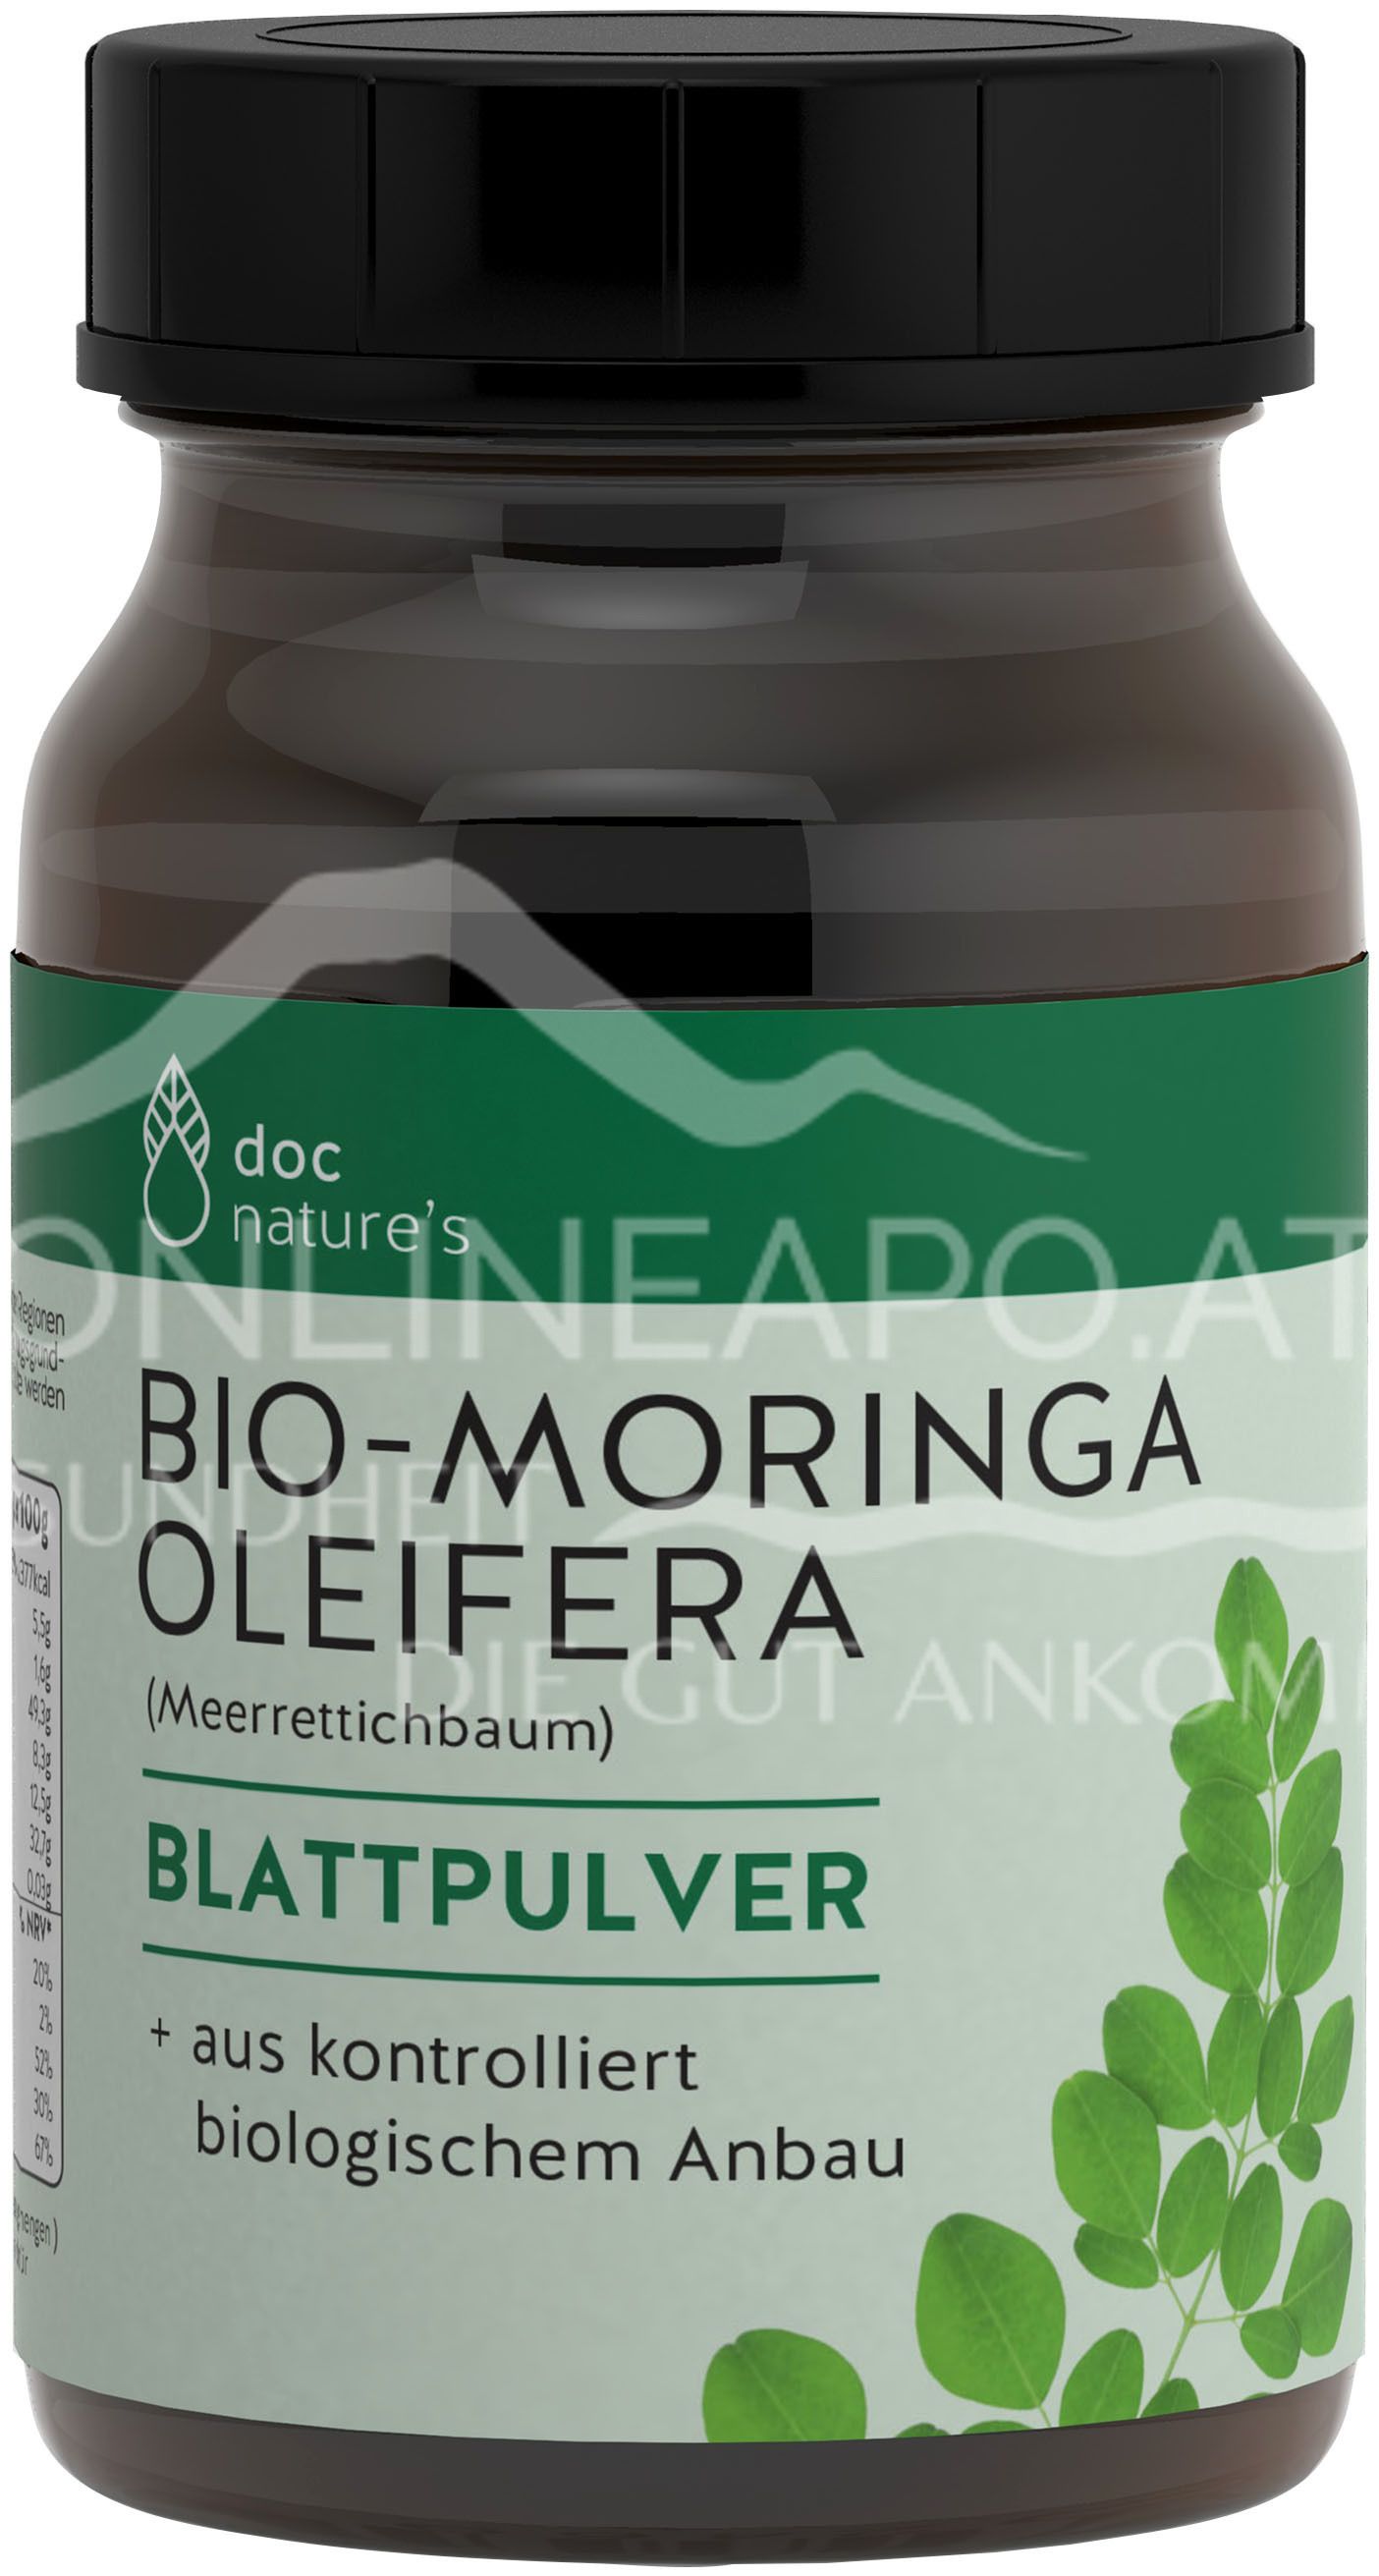 doc nature’s Bio MORINGA OLEIFERA Blattpulver